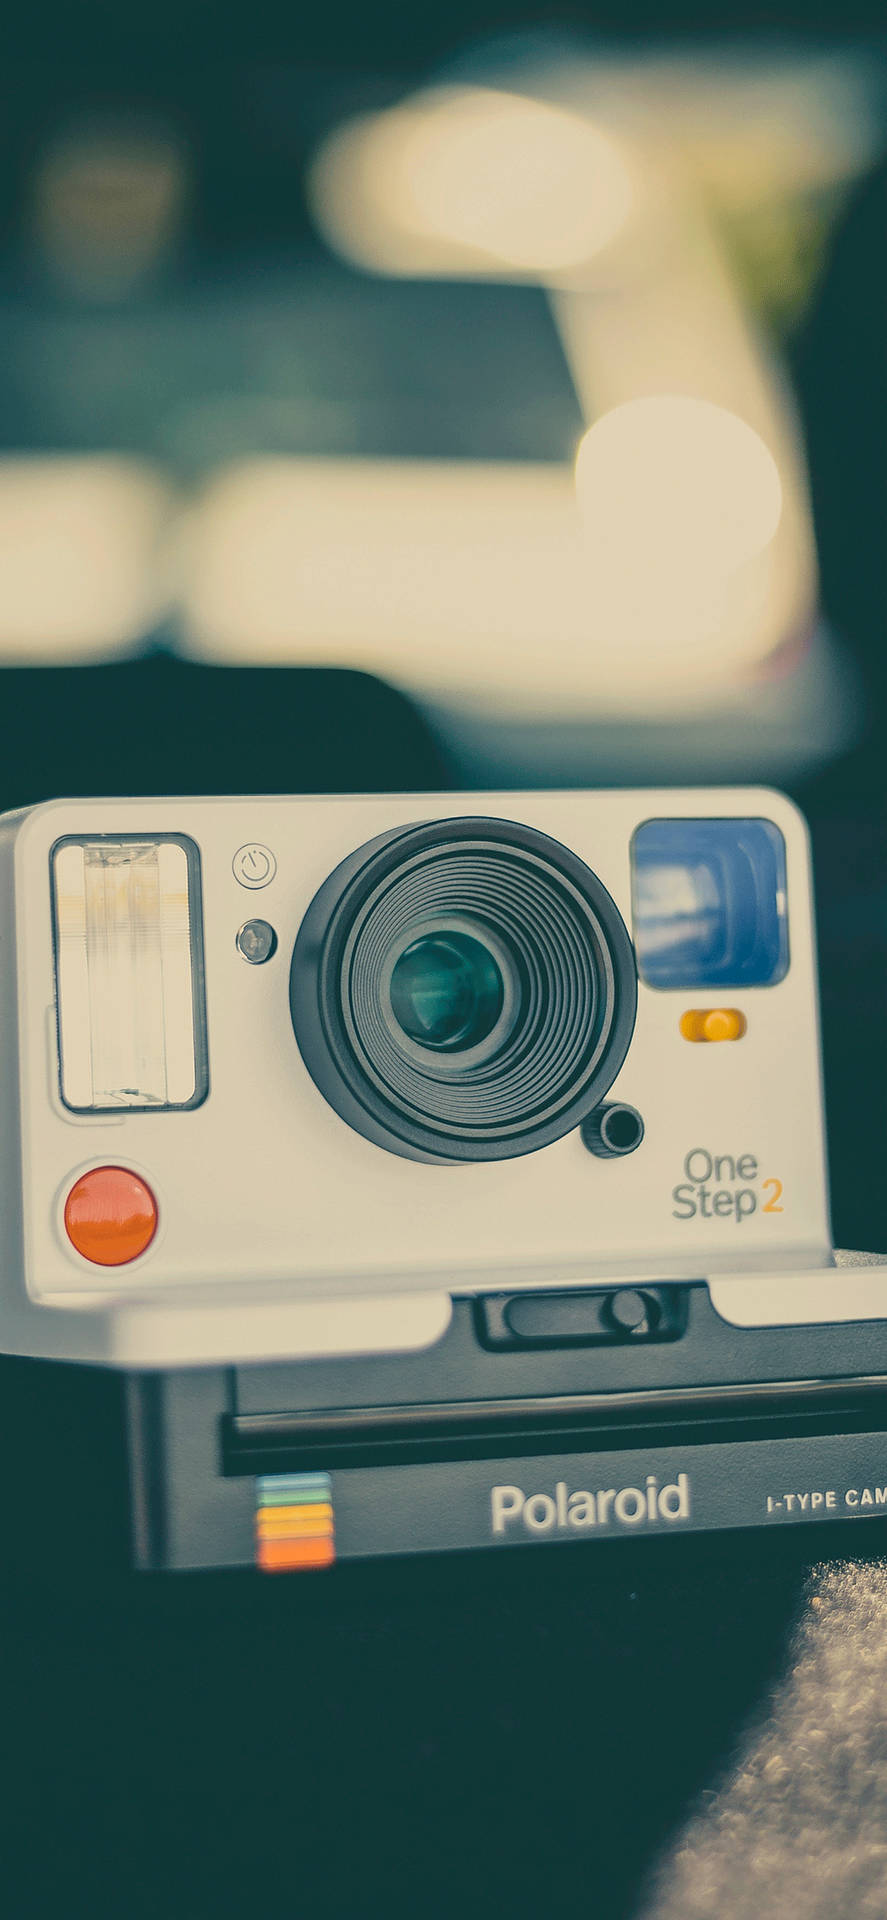 Polaroid Camera Retro Aesthetic Iphone Background